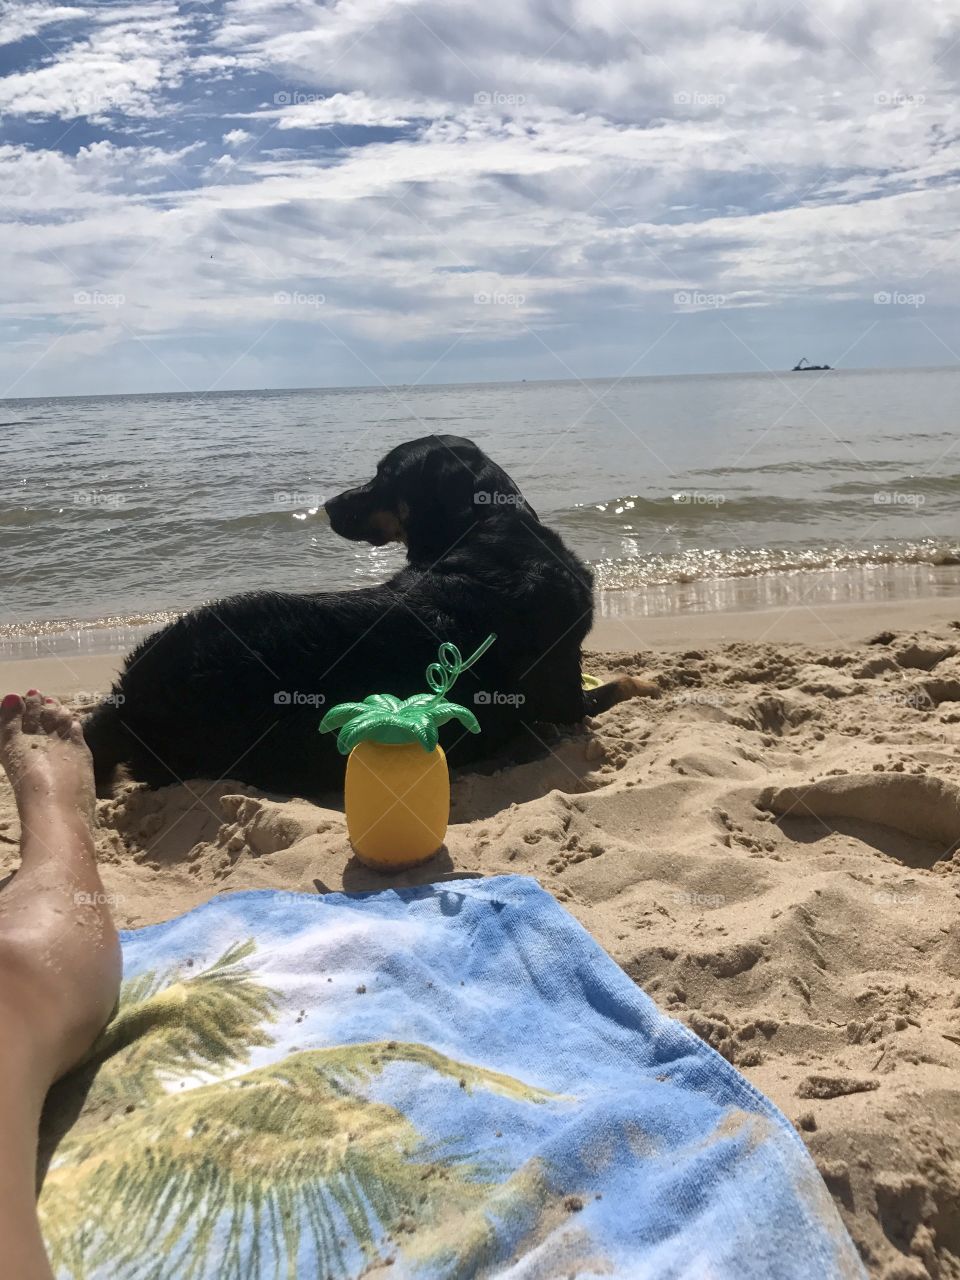 Jake enjoying the dog beach on Lake Michigan!